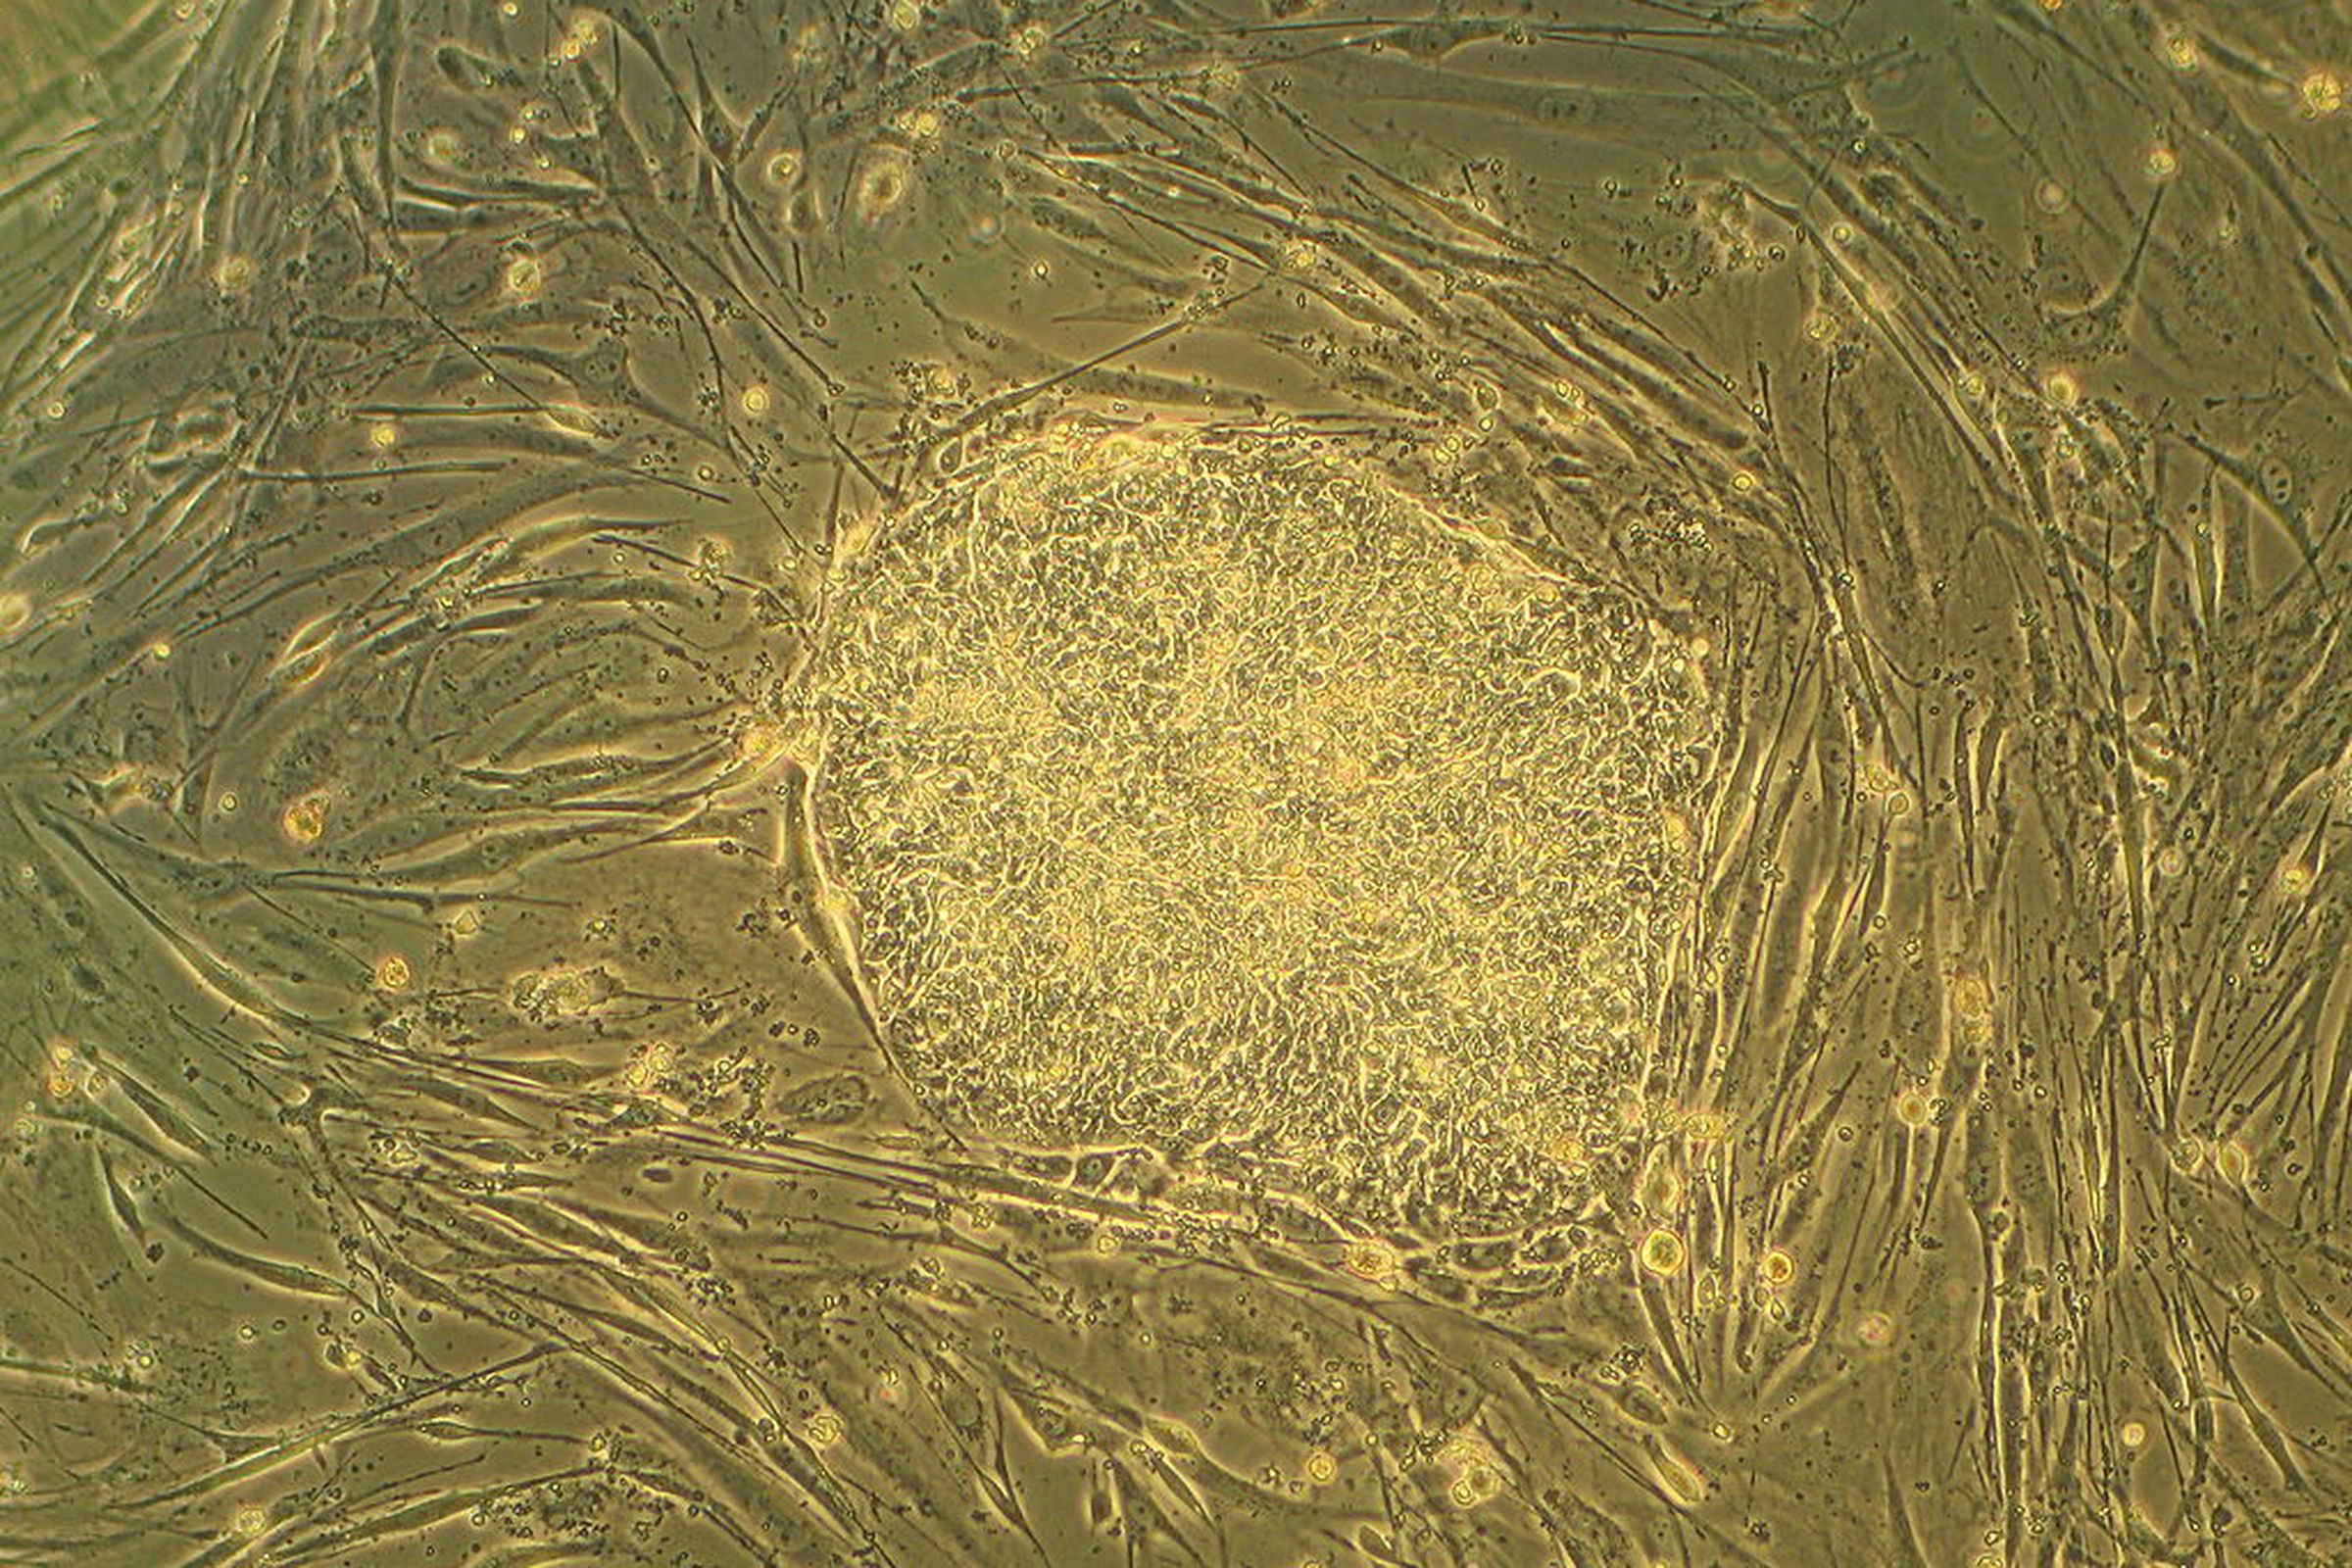 human stem cell - Ryddragyn (wikimedia commons)